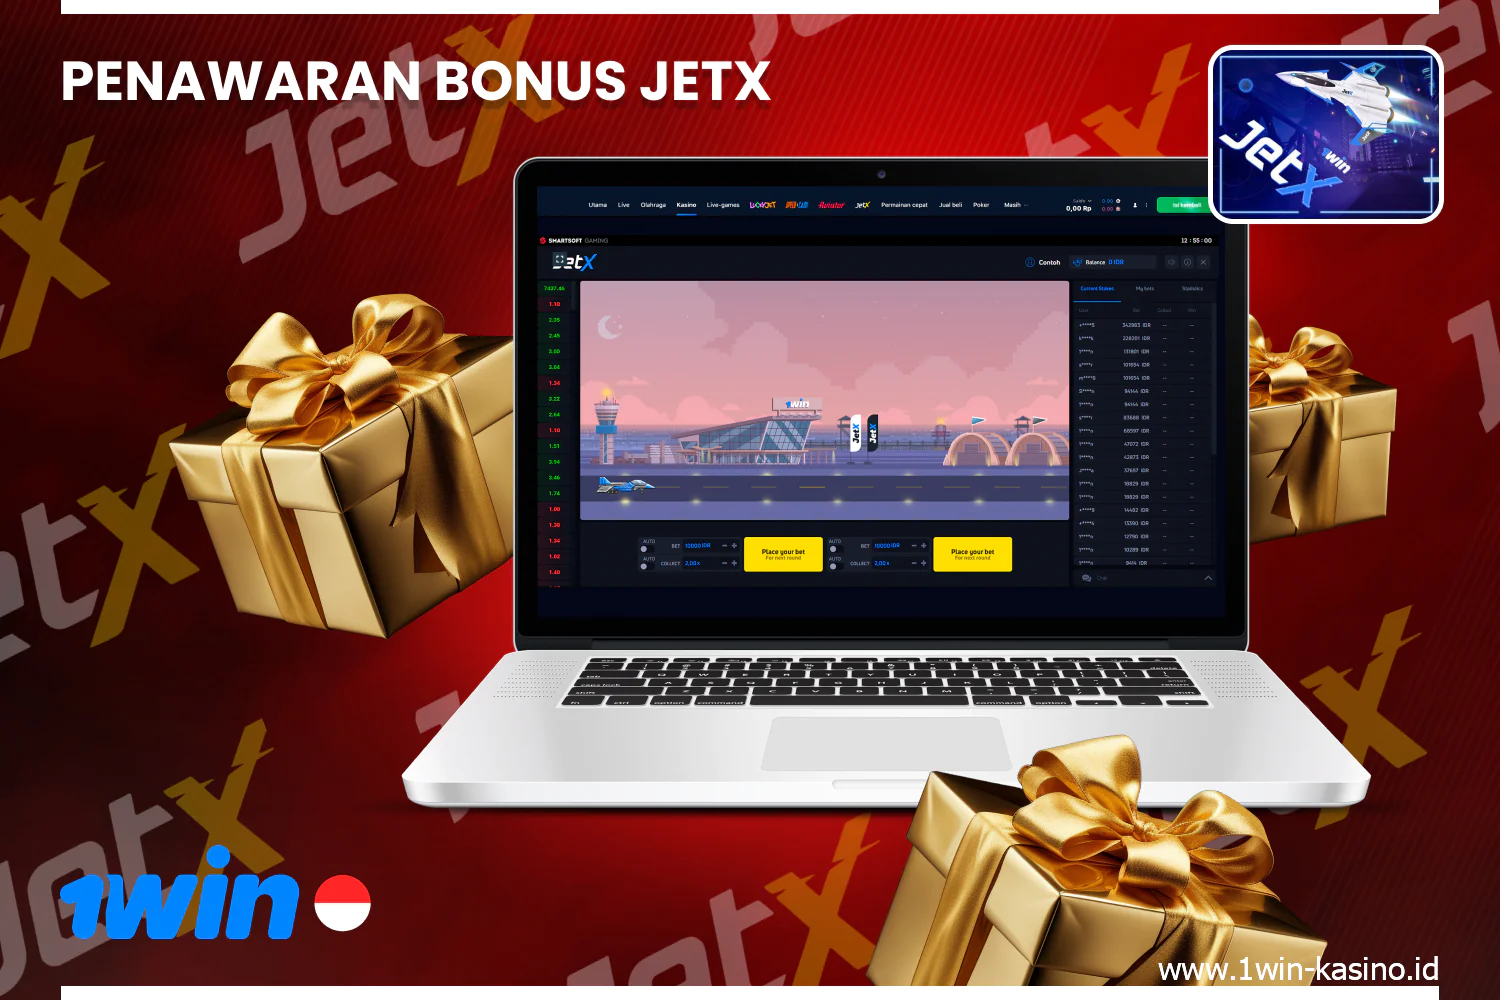 Penjudi dari Indonesia dapat menggunakan berbagai bonus untuk memainkan 1win JetX permainan